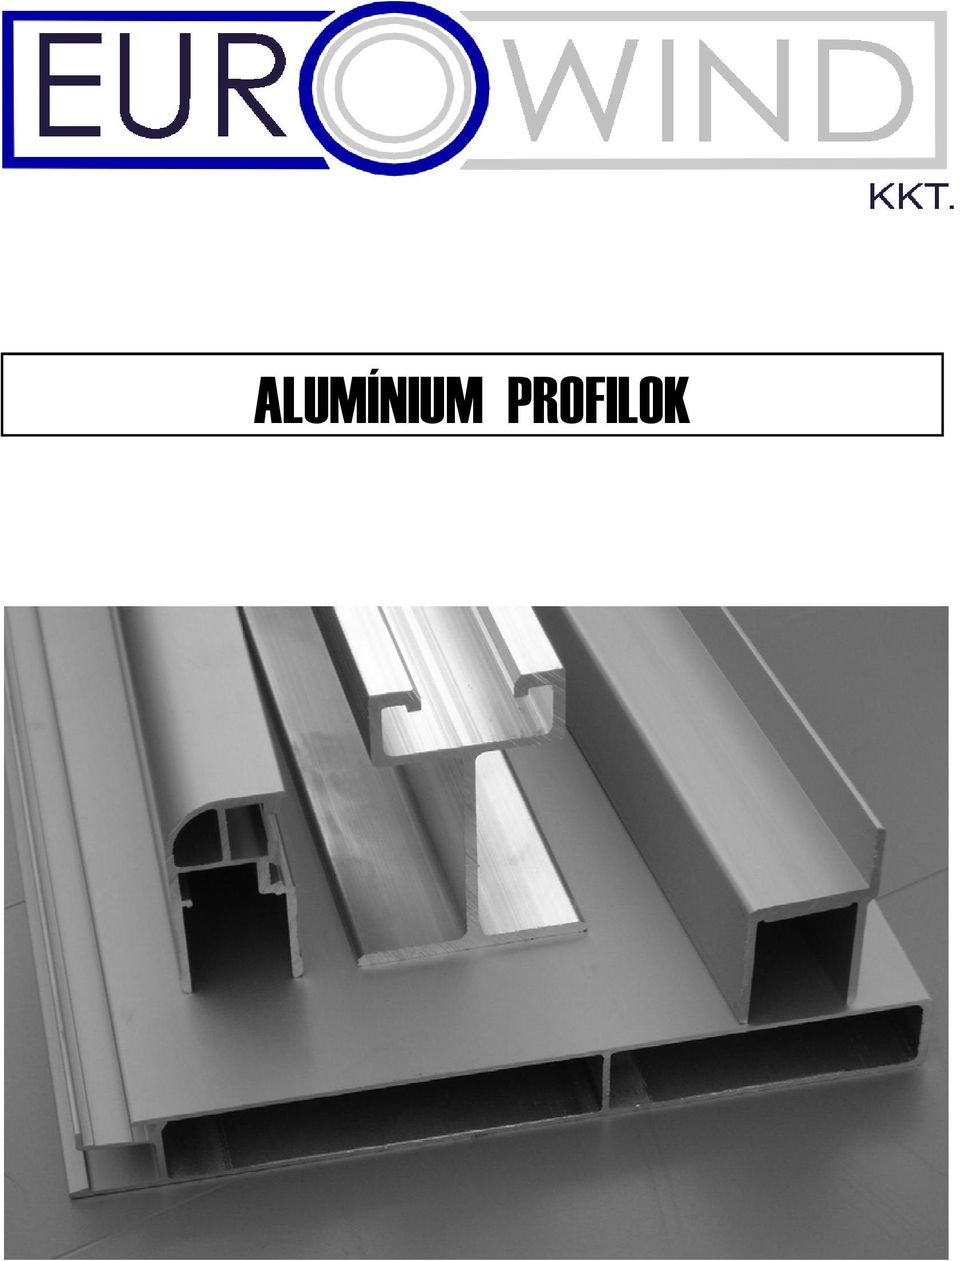 Aluminium profilok forgalmazása